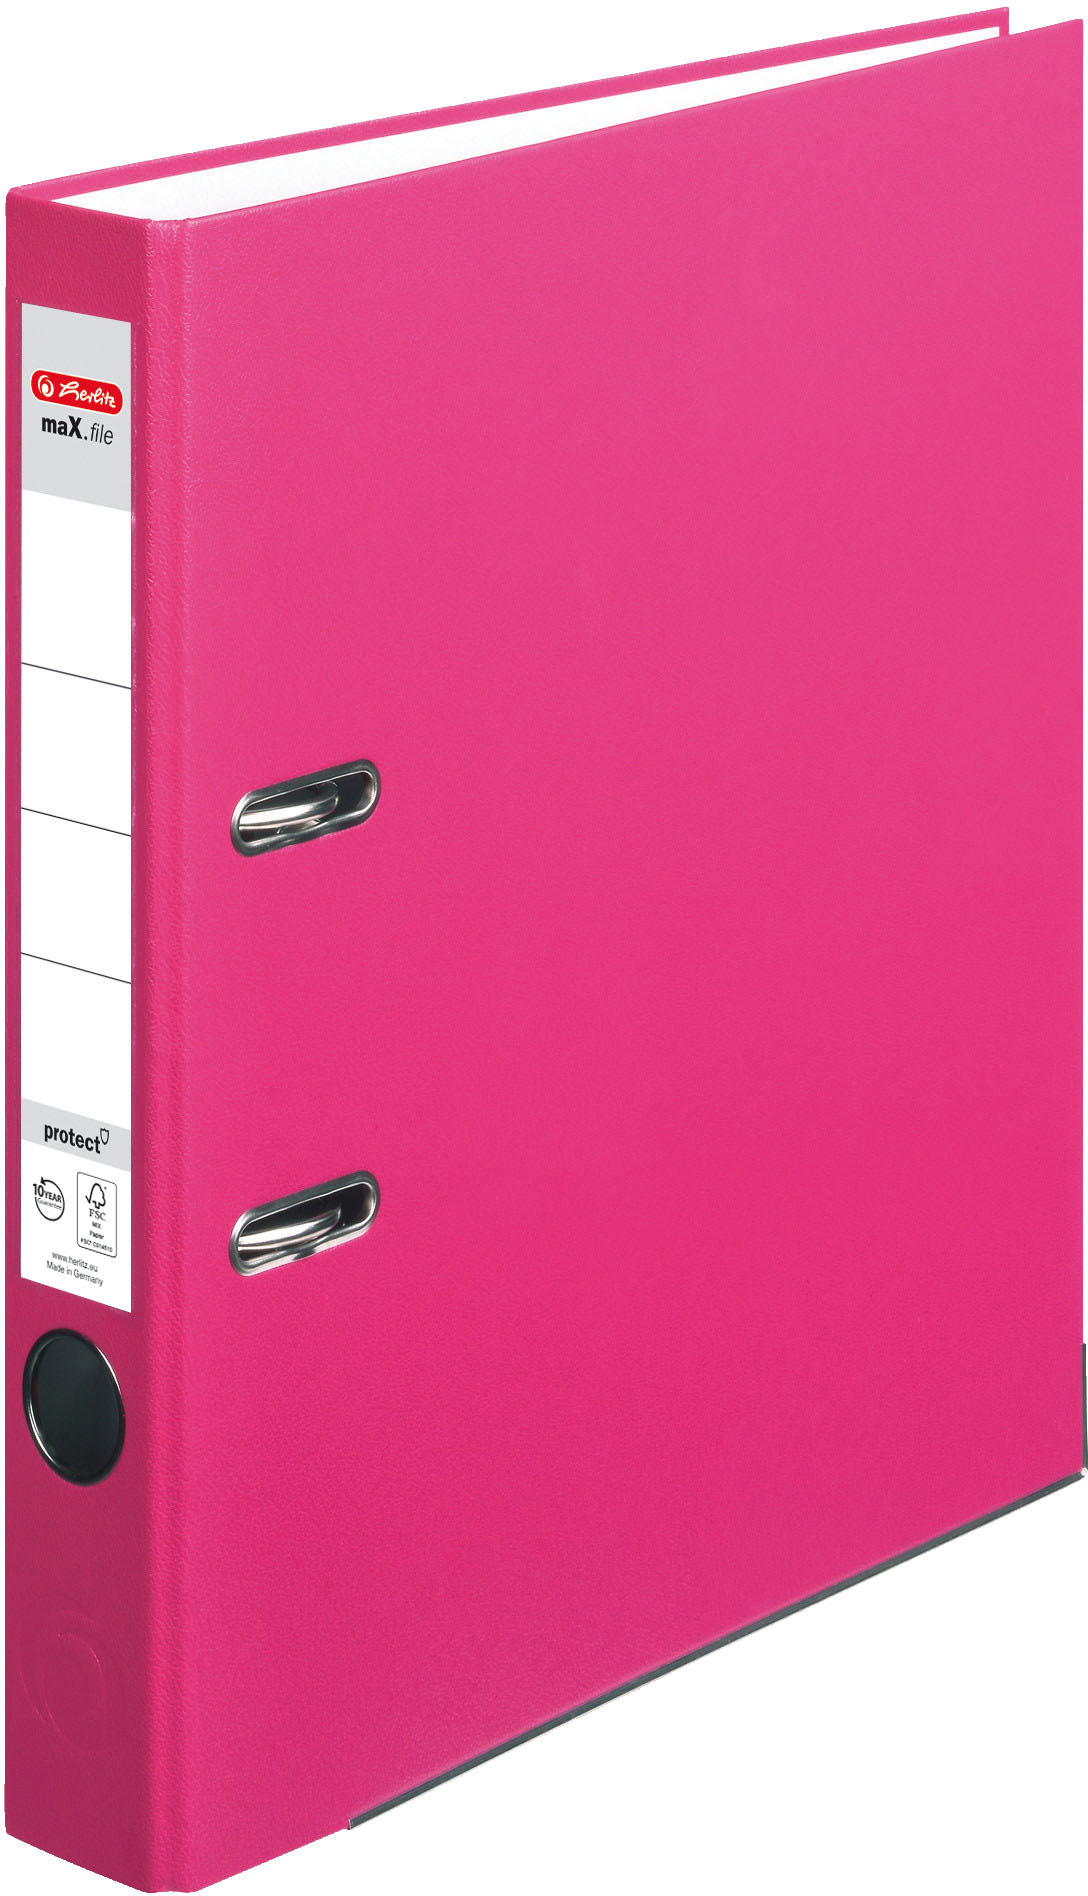 HERLITZ Classeur maX.file 5cm 11053691 pink A4 pink A4